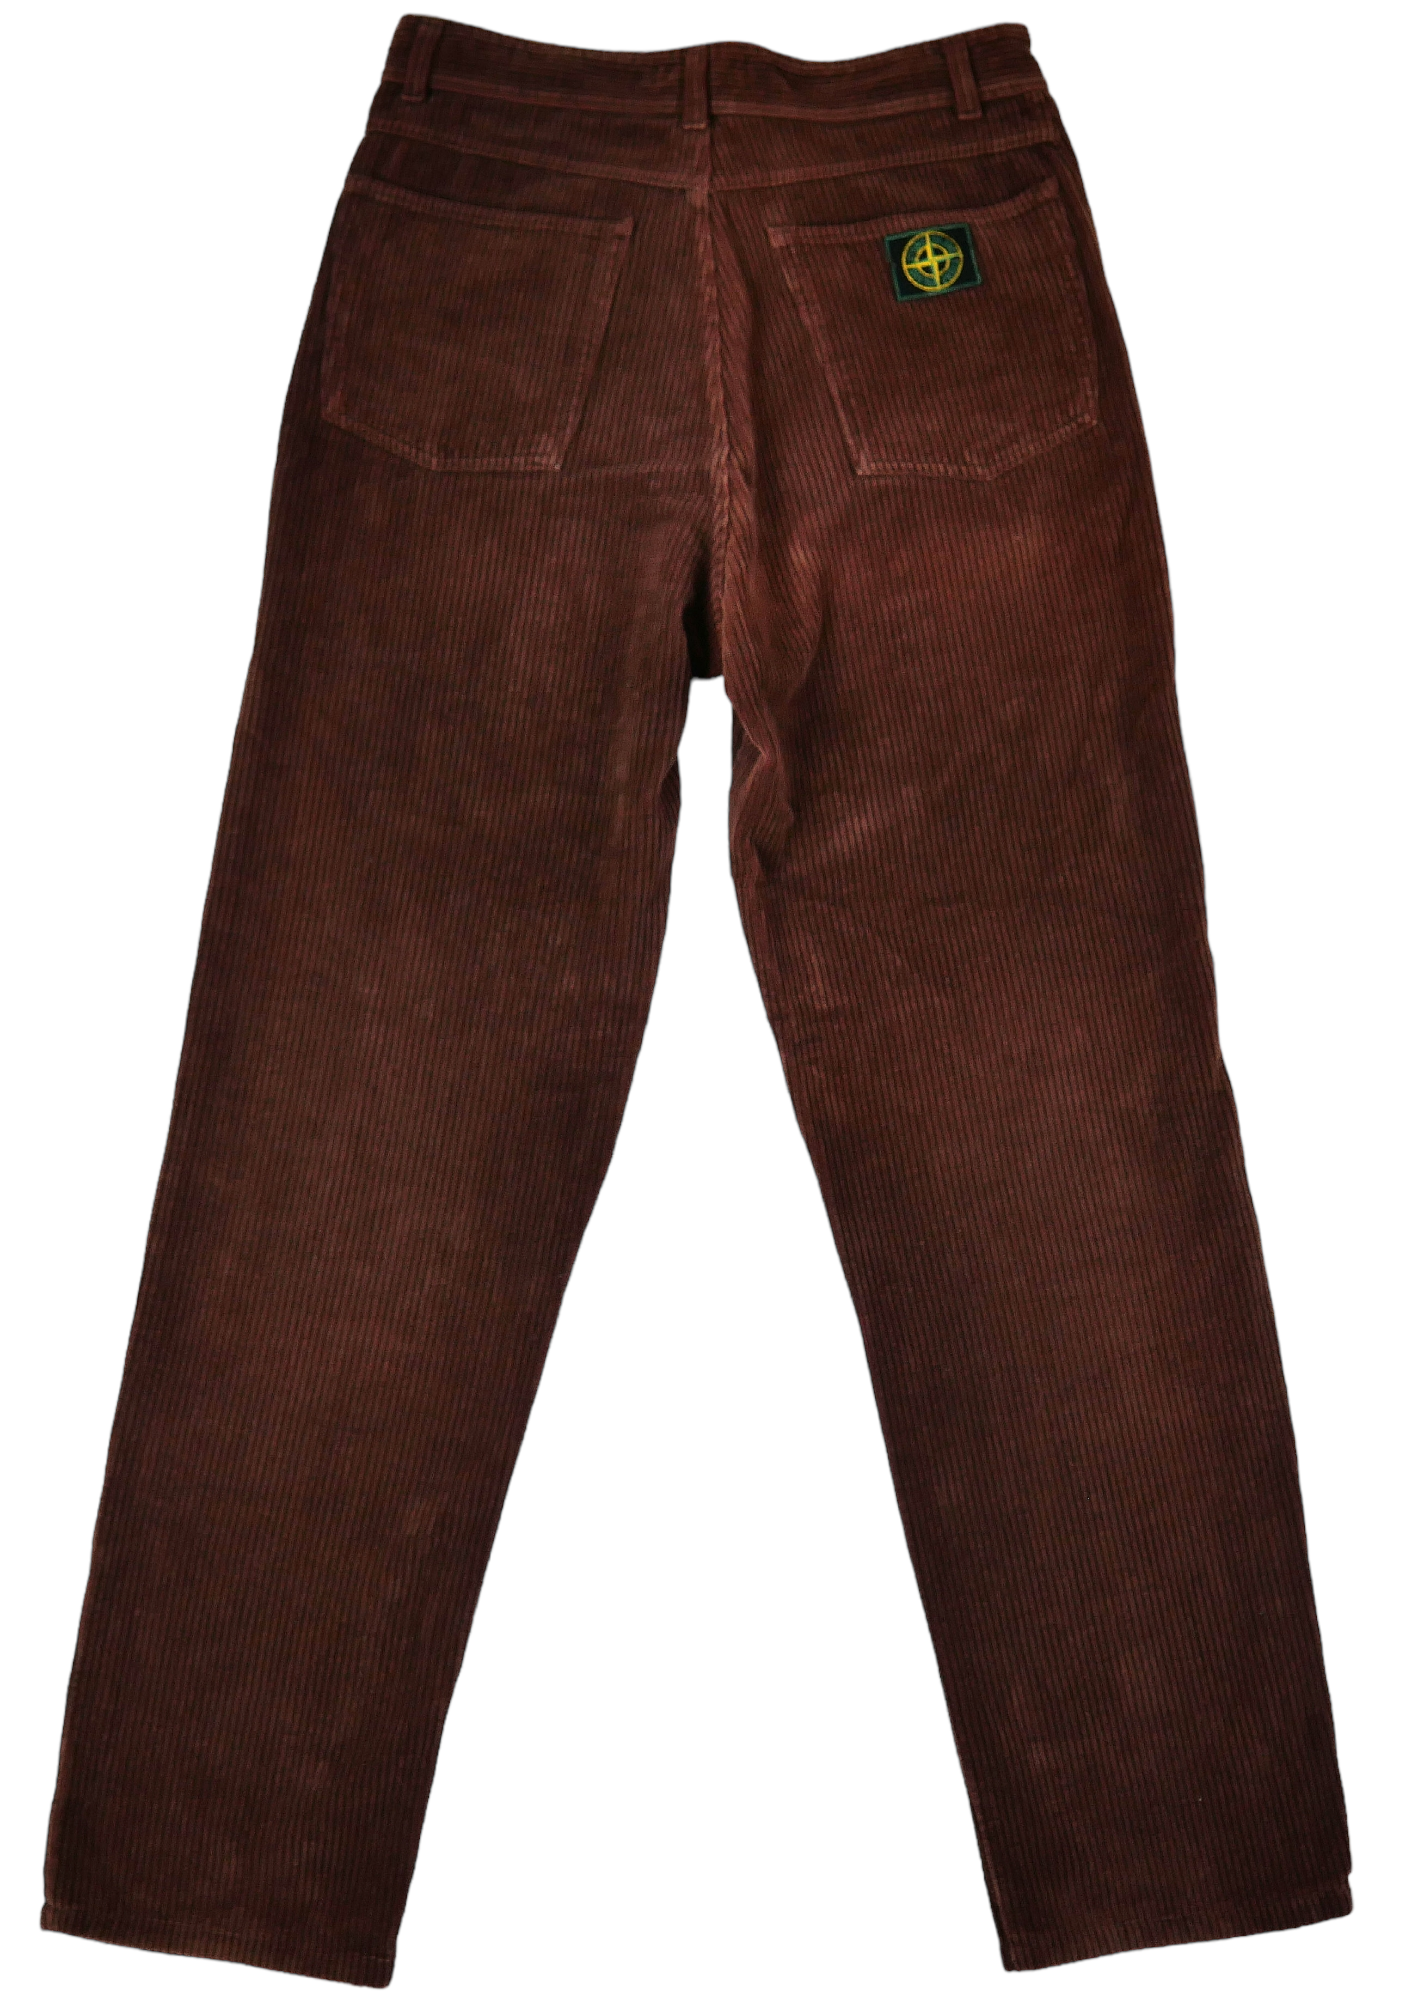 Pre 92 Stone Island Chocolate Brown Corduroy Trousers